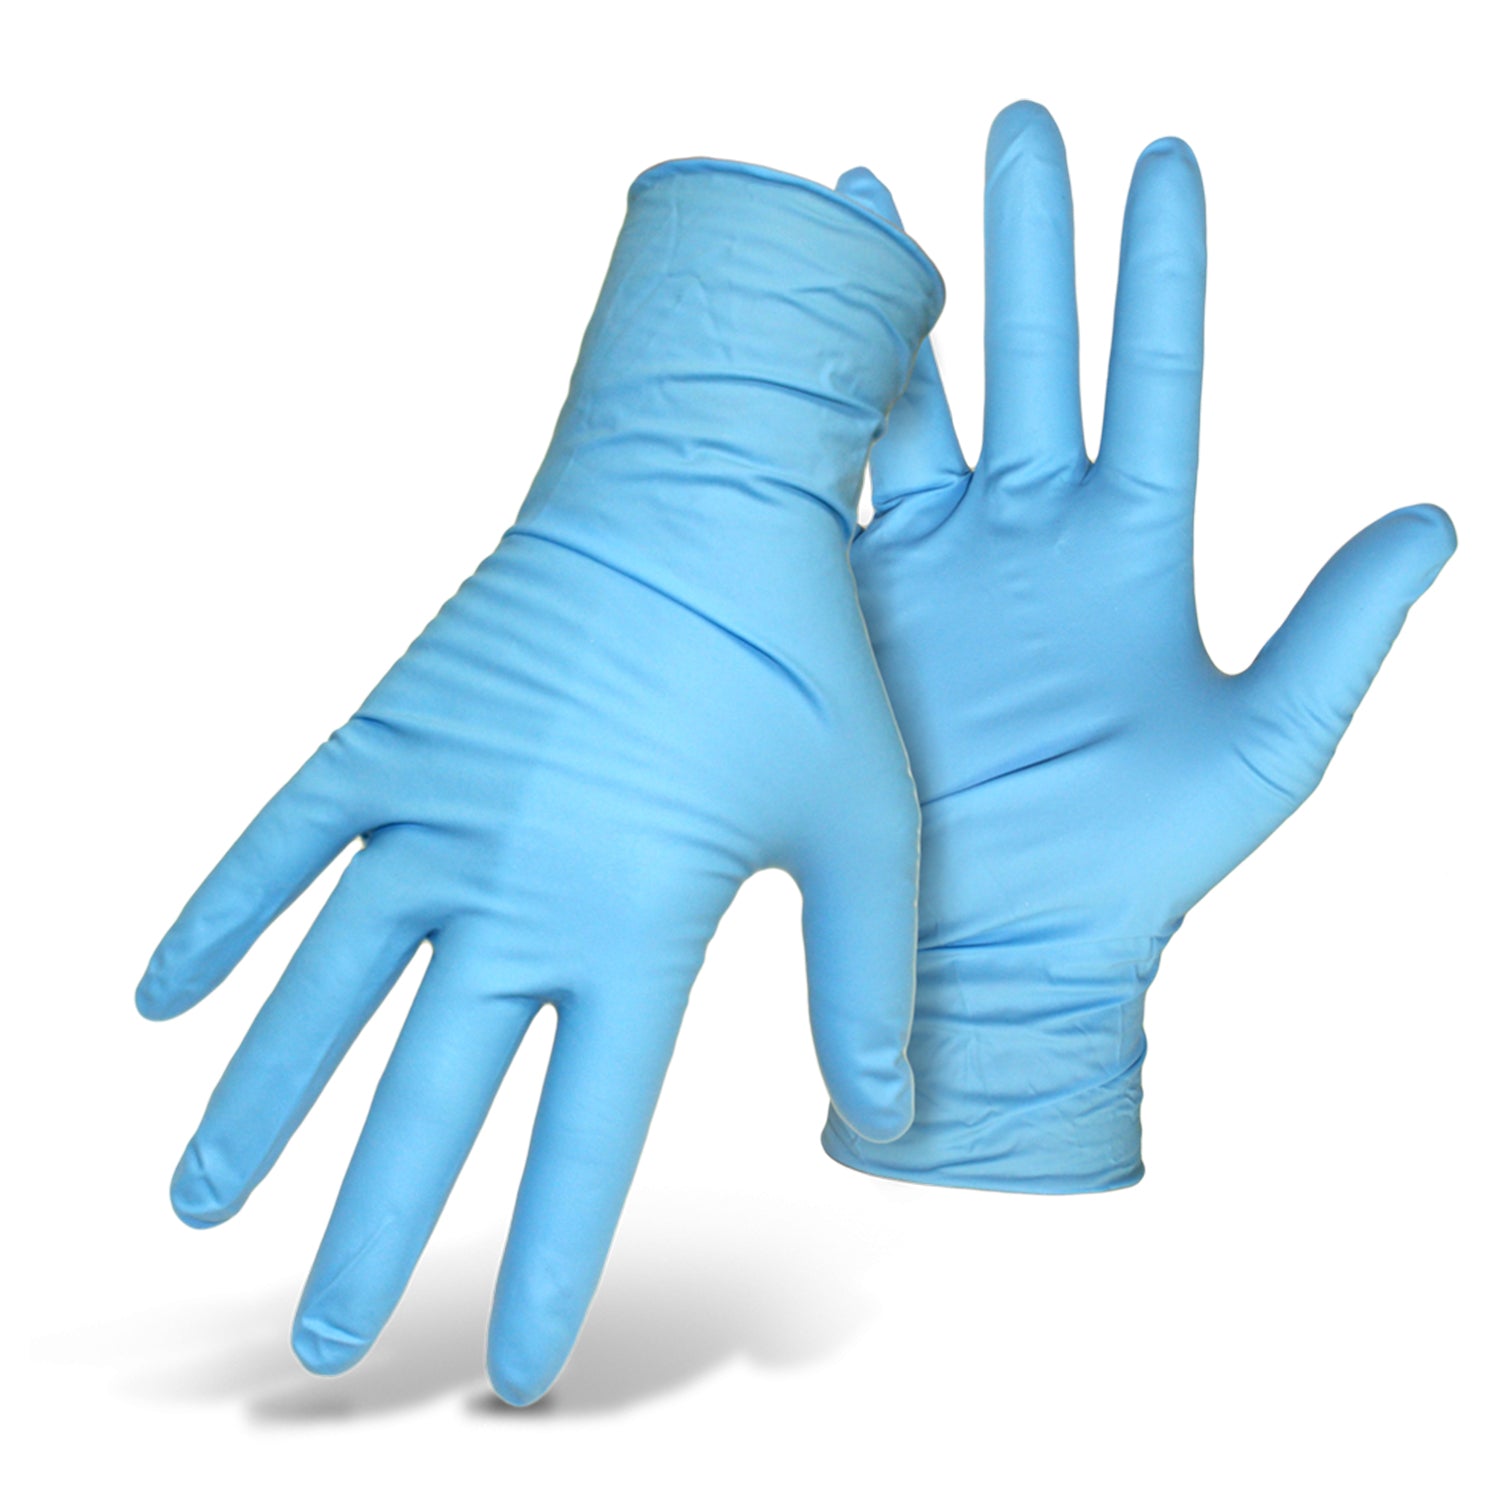 Premier AF Nitrile Examination Gloves | Sterile | Latex Free | Medium | Pack of 50 Pairs (7)